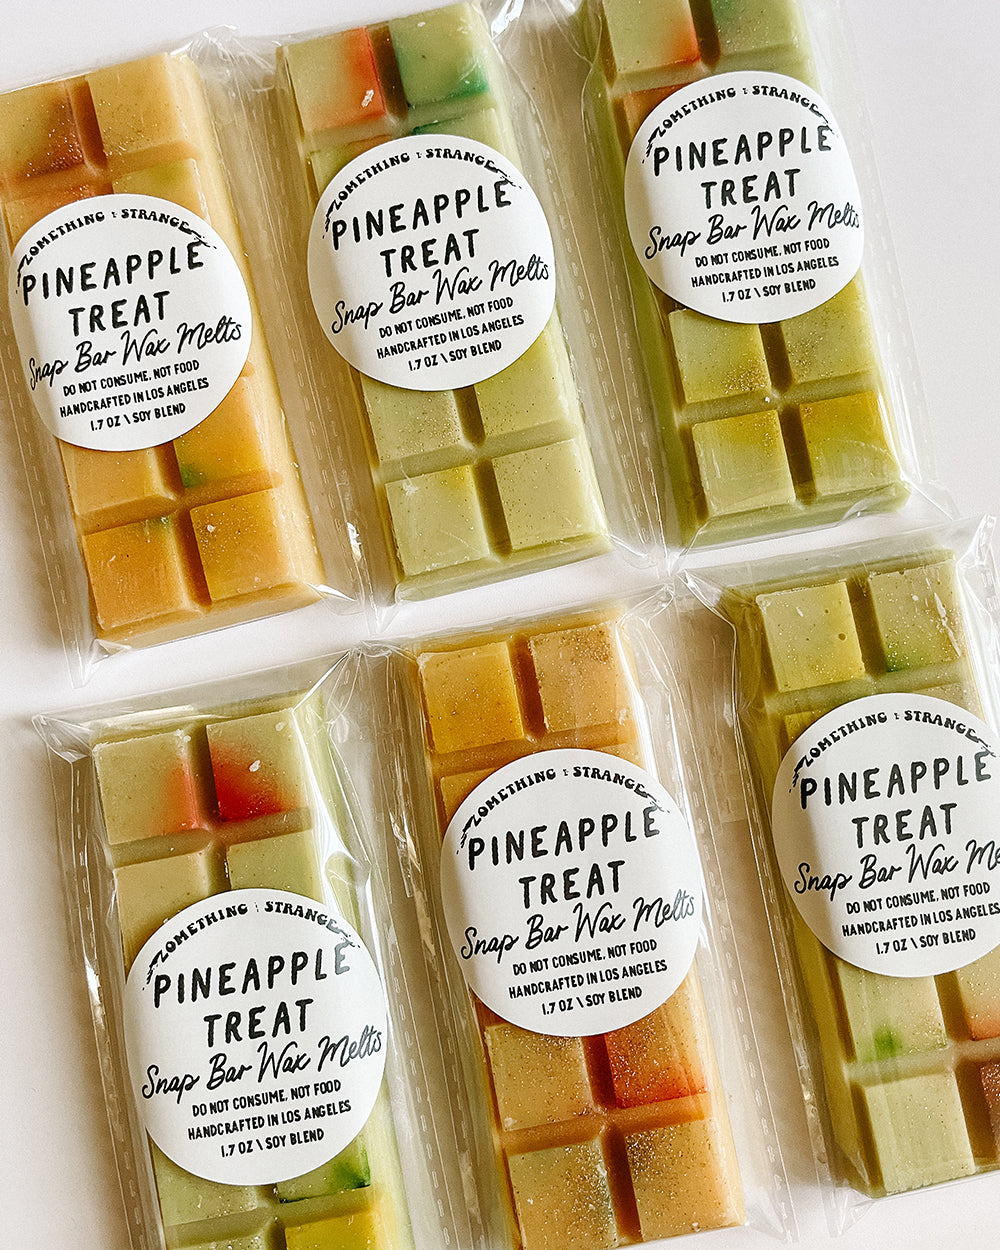 Pineapple Treat Snap Bar Wax Melt